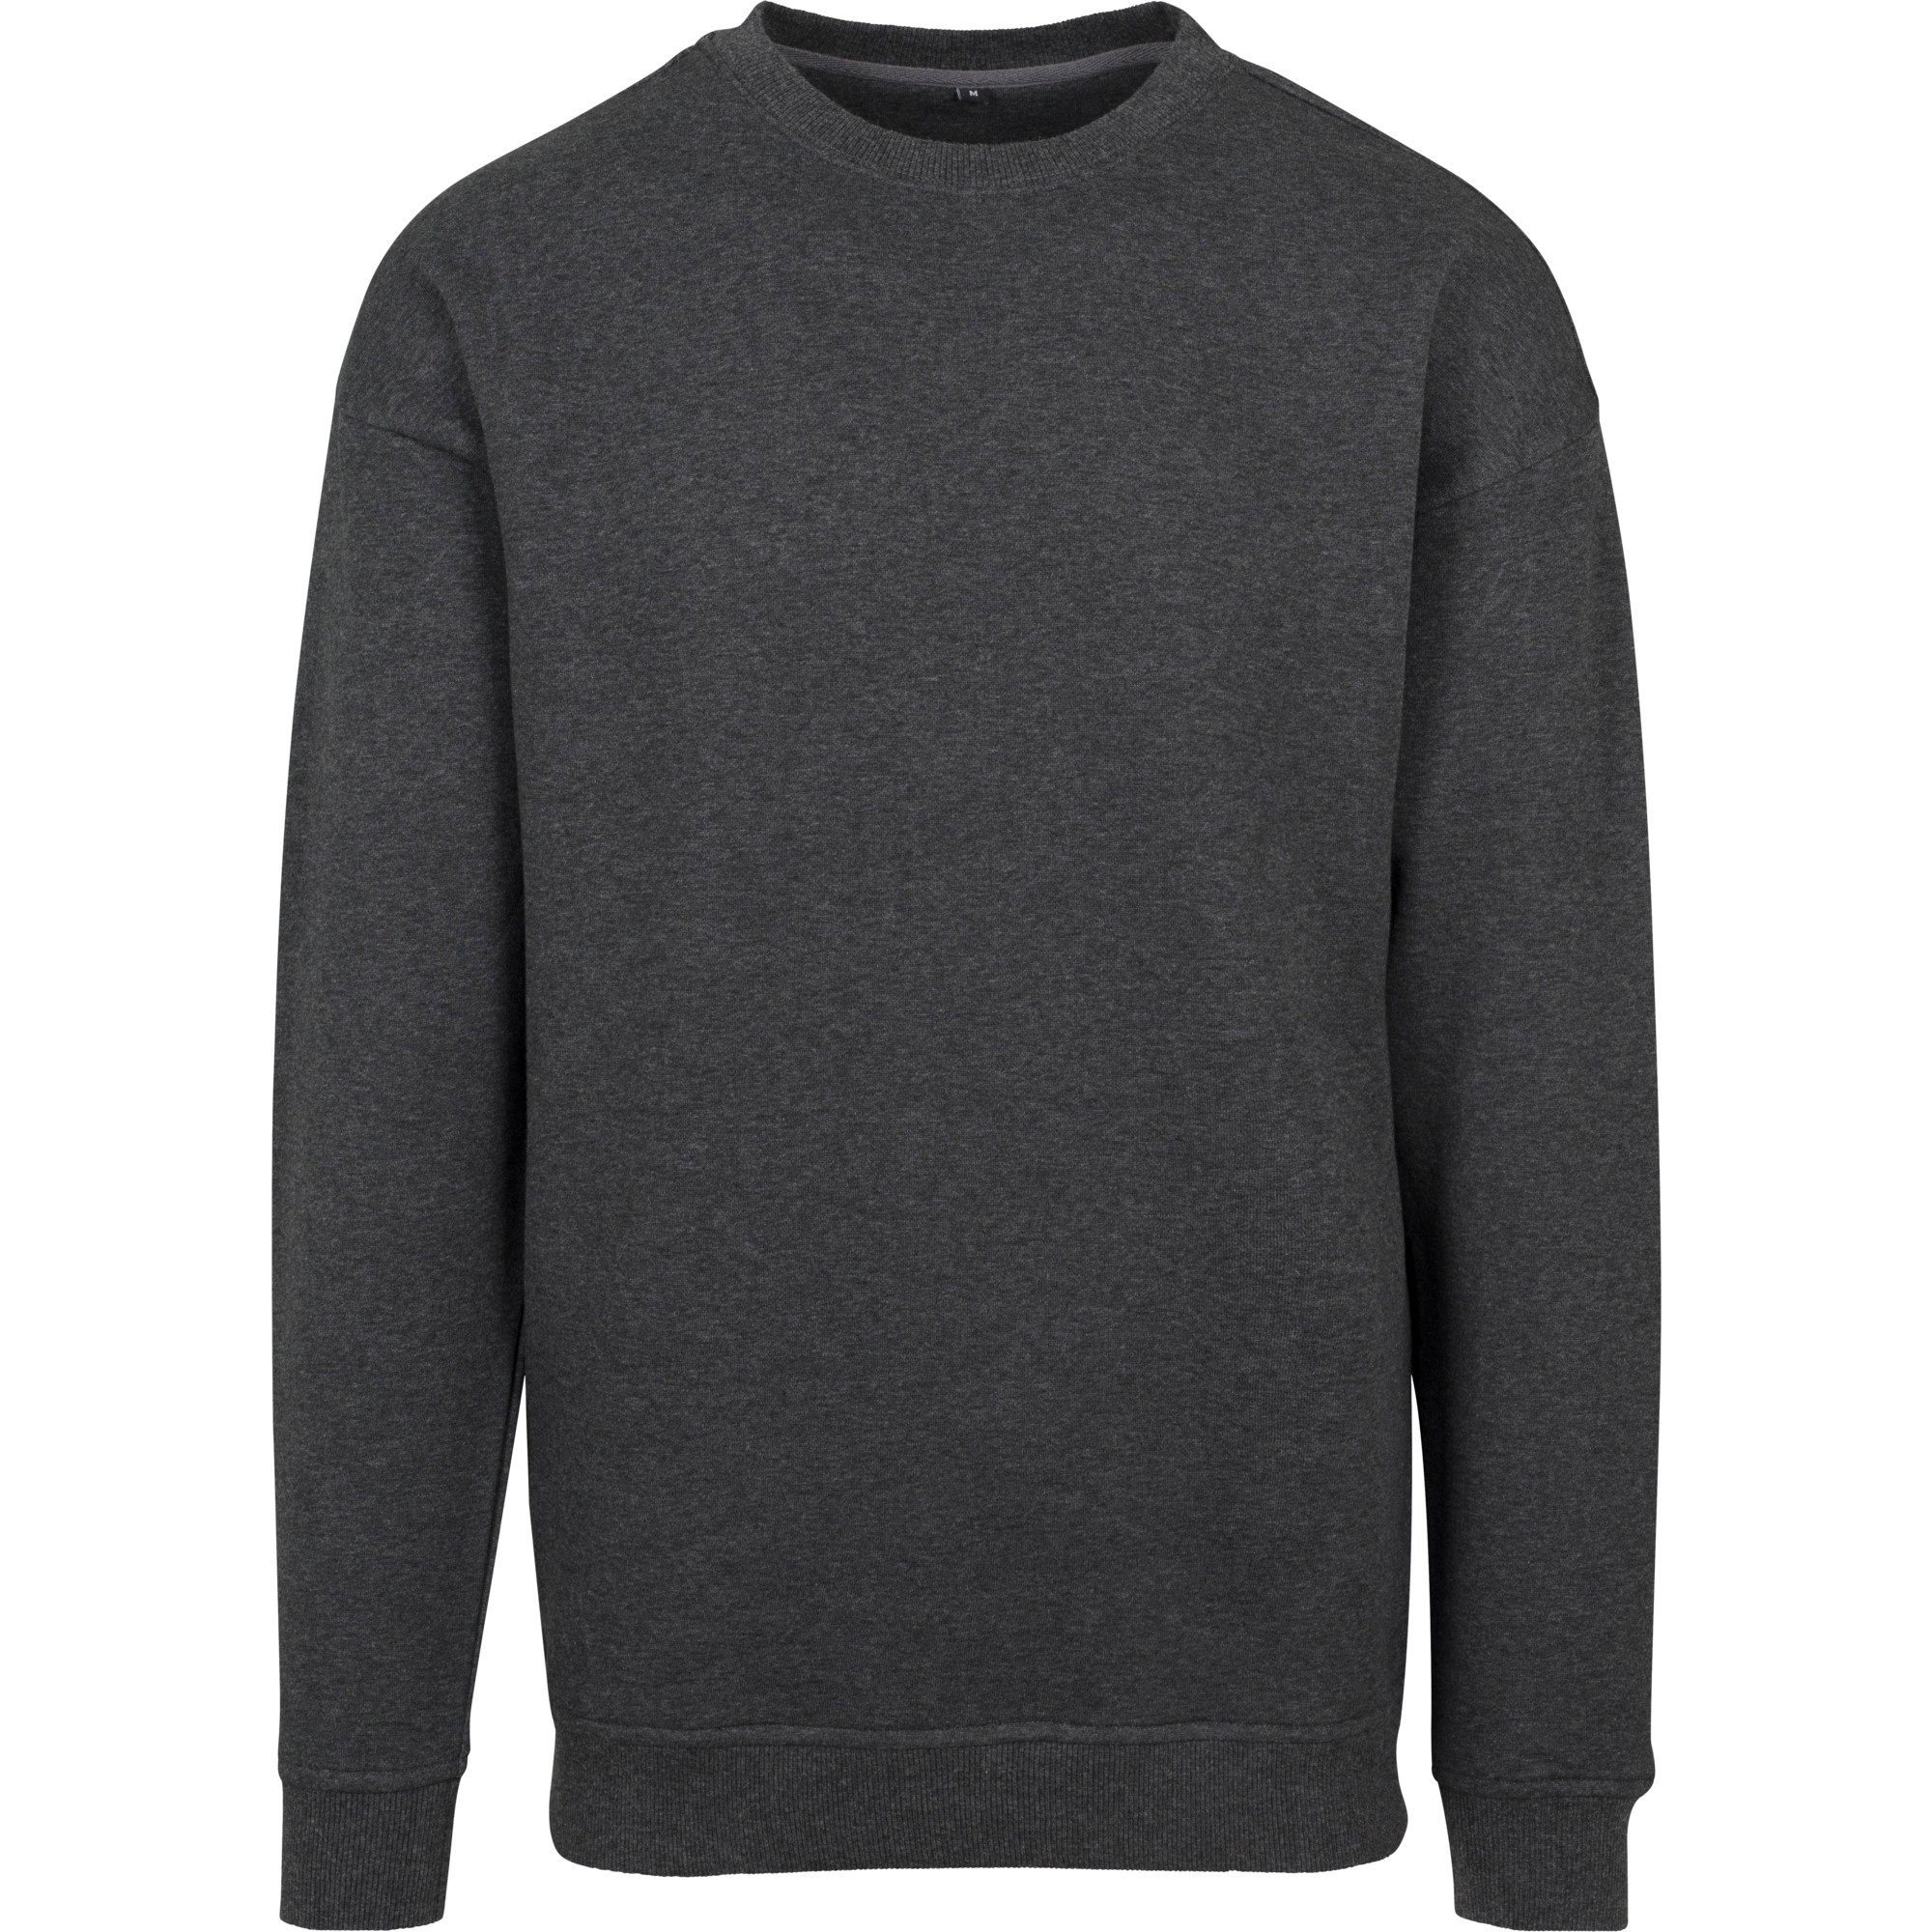 Build Your Brand Sweatshirt schwerer Herren Crewneck Sweater Pullover S bis 5XL schwarz | Sweatshirts